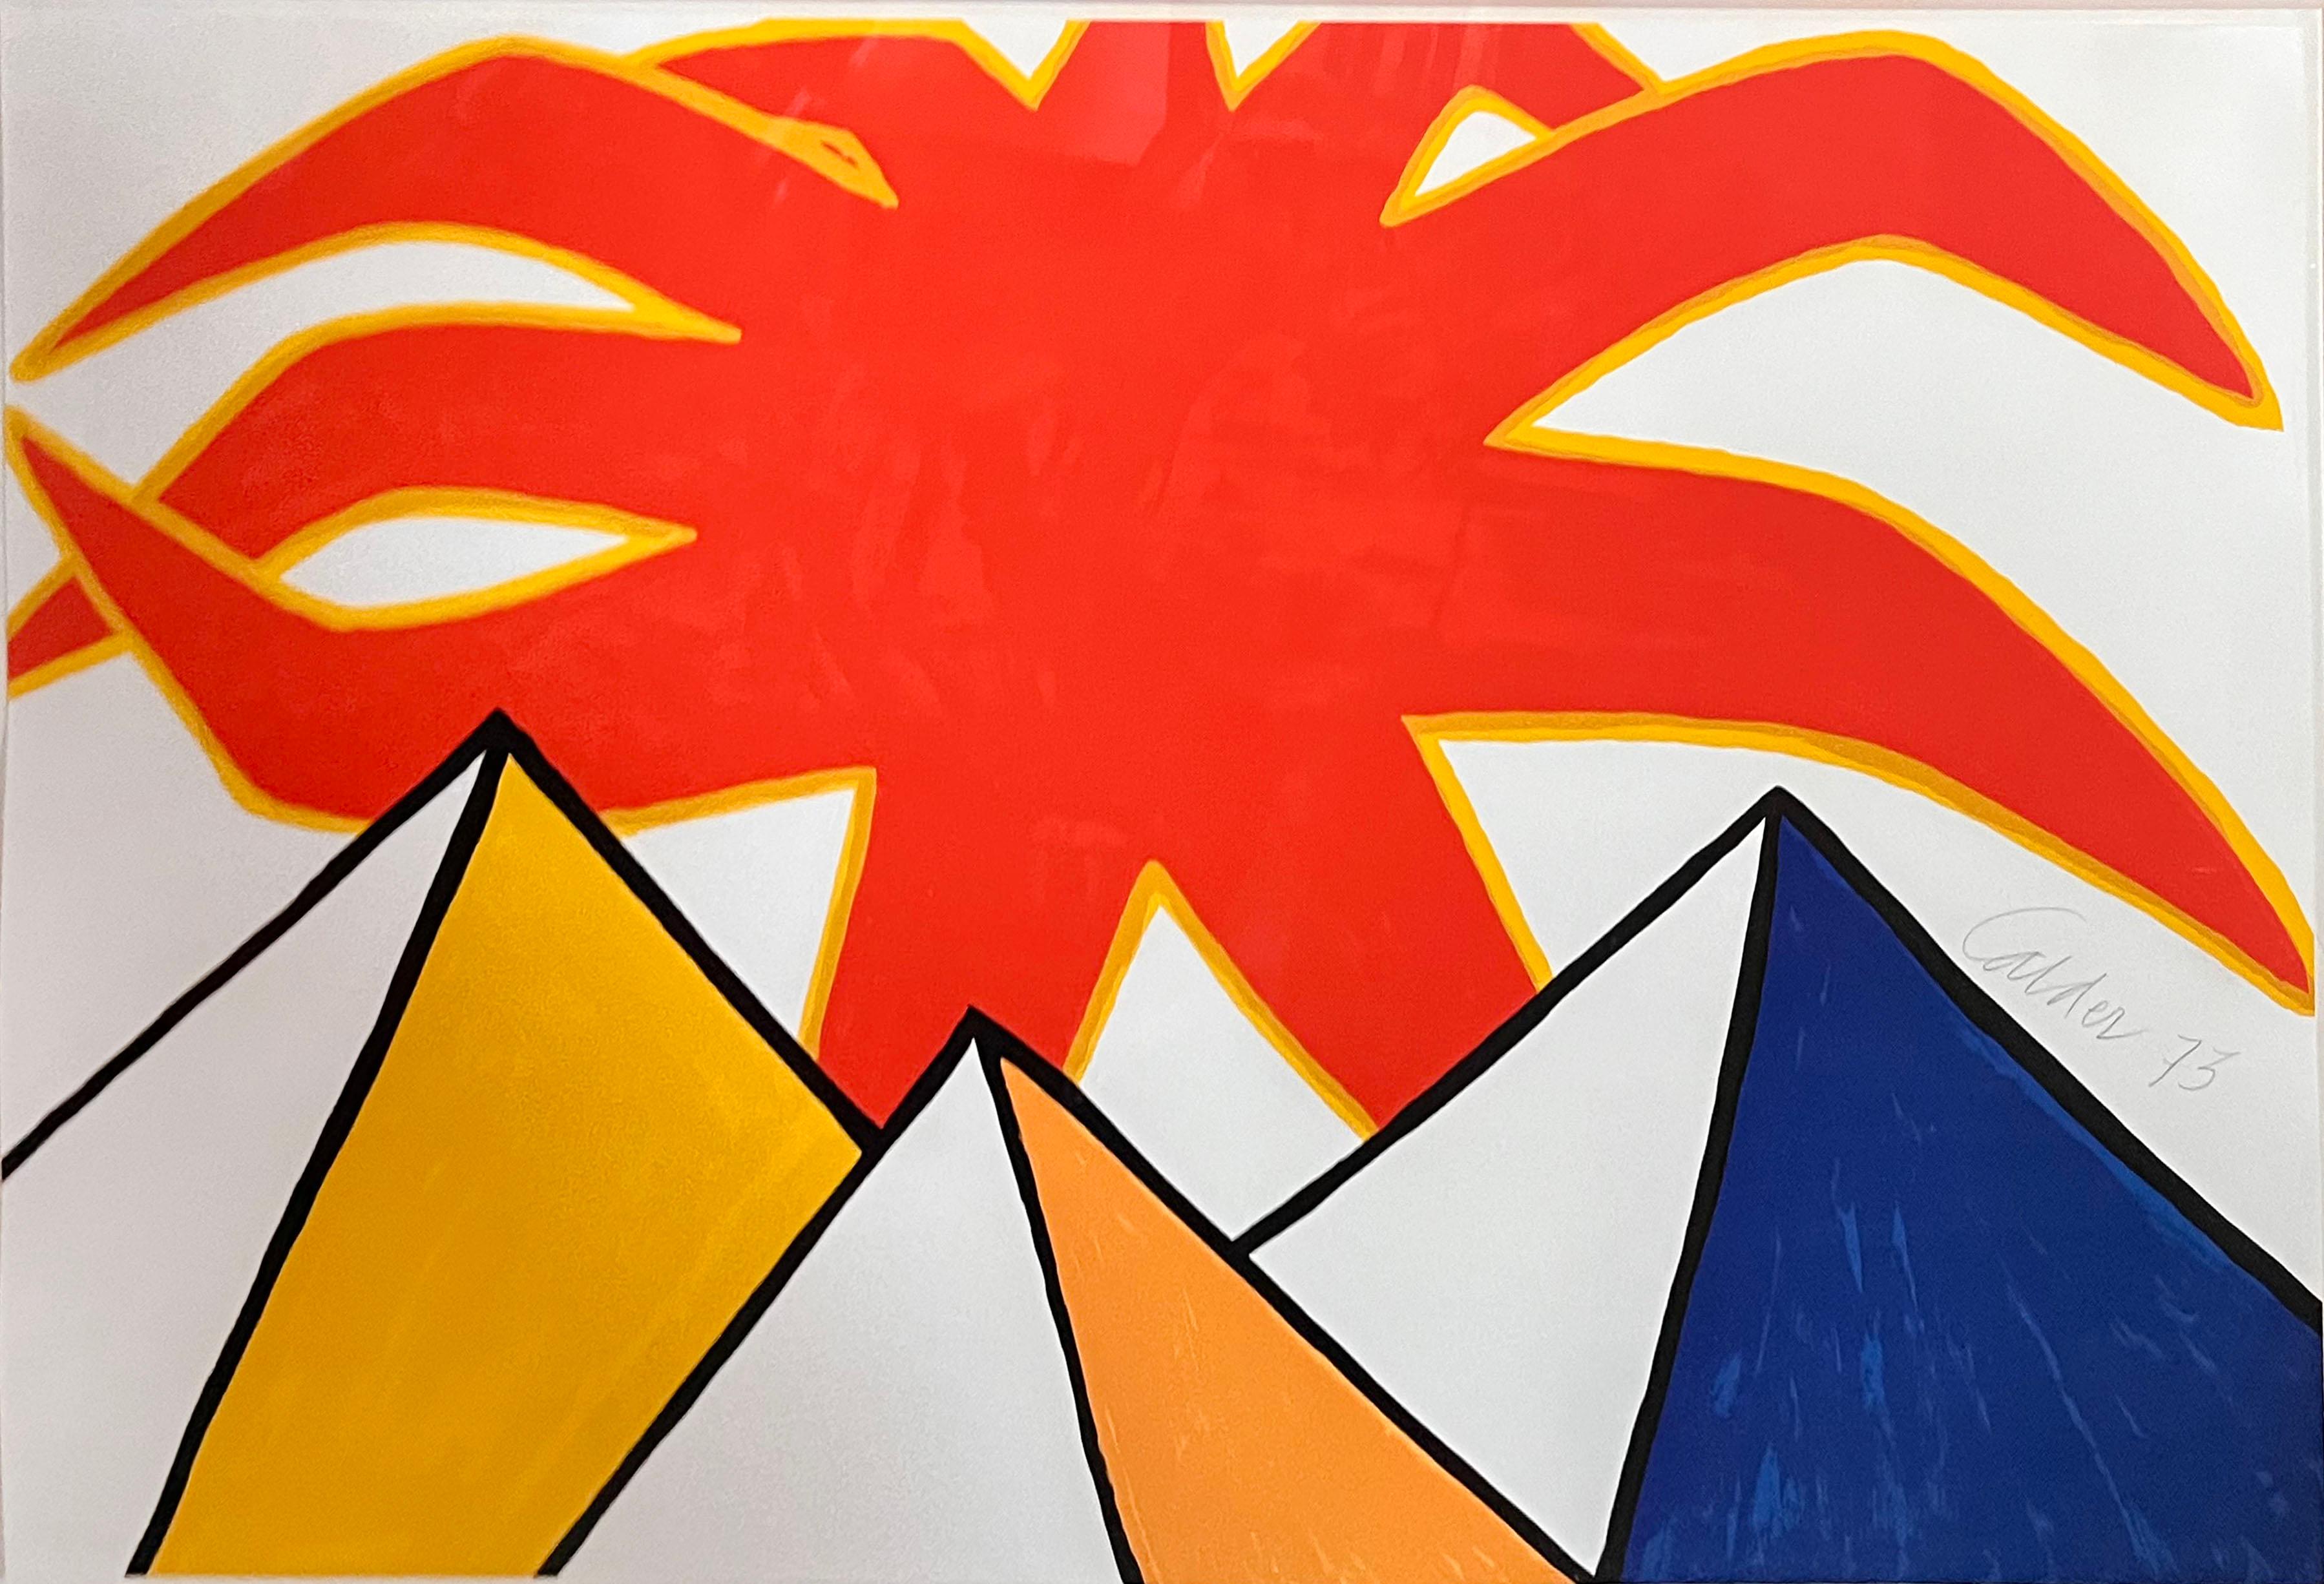 PYRAMIDS AND SUN - Print by Alexander Calder